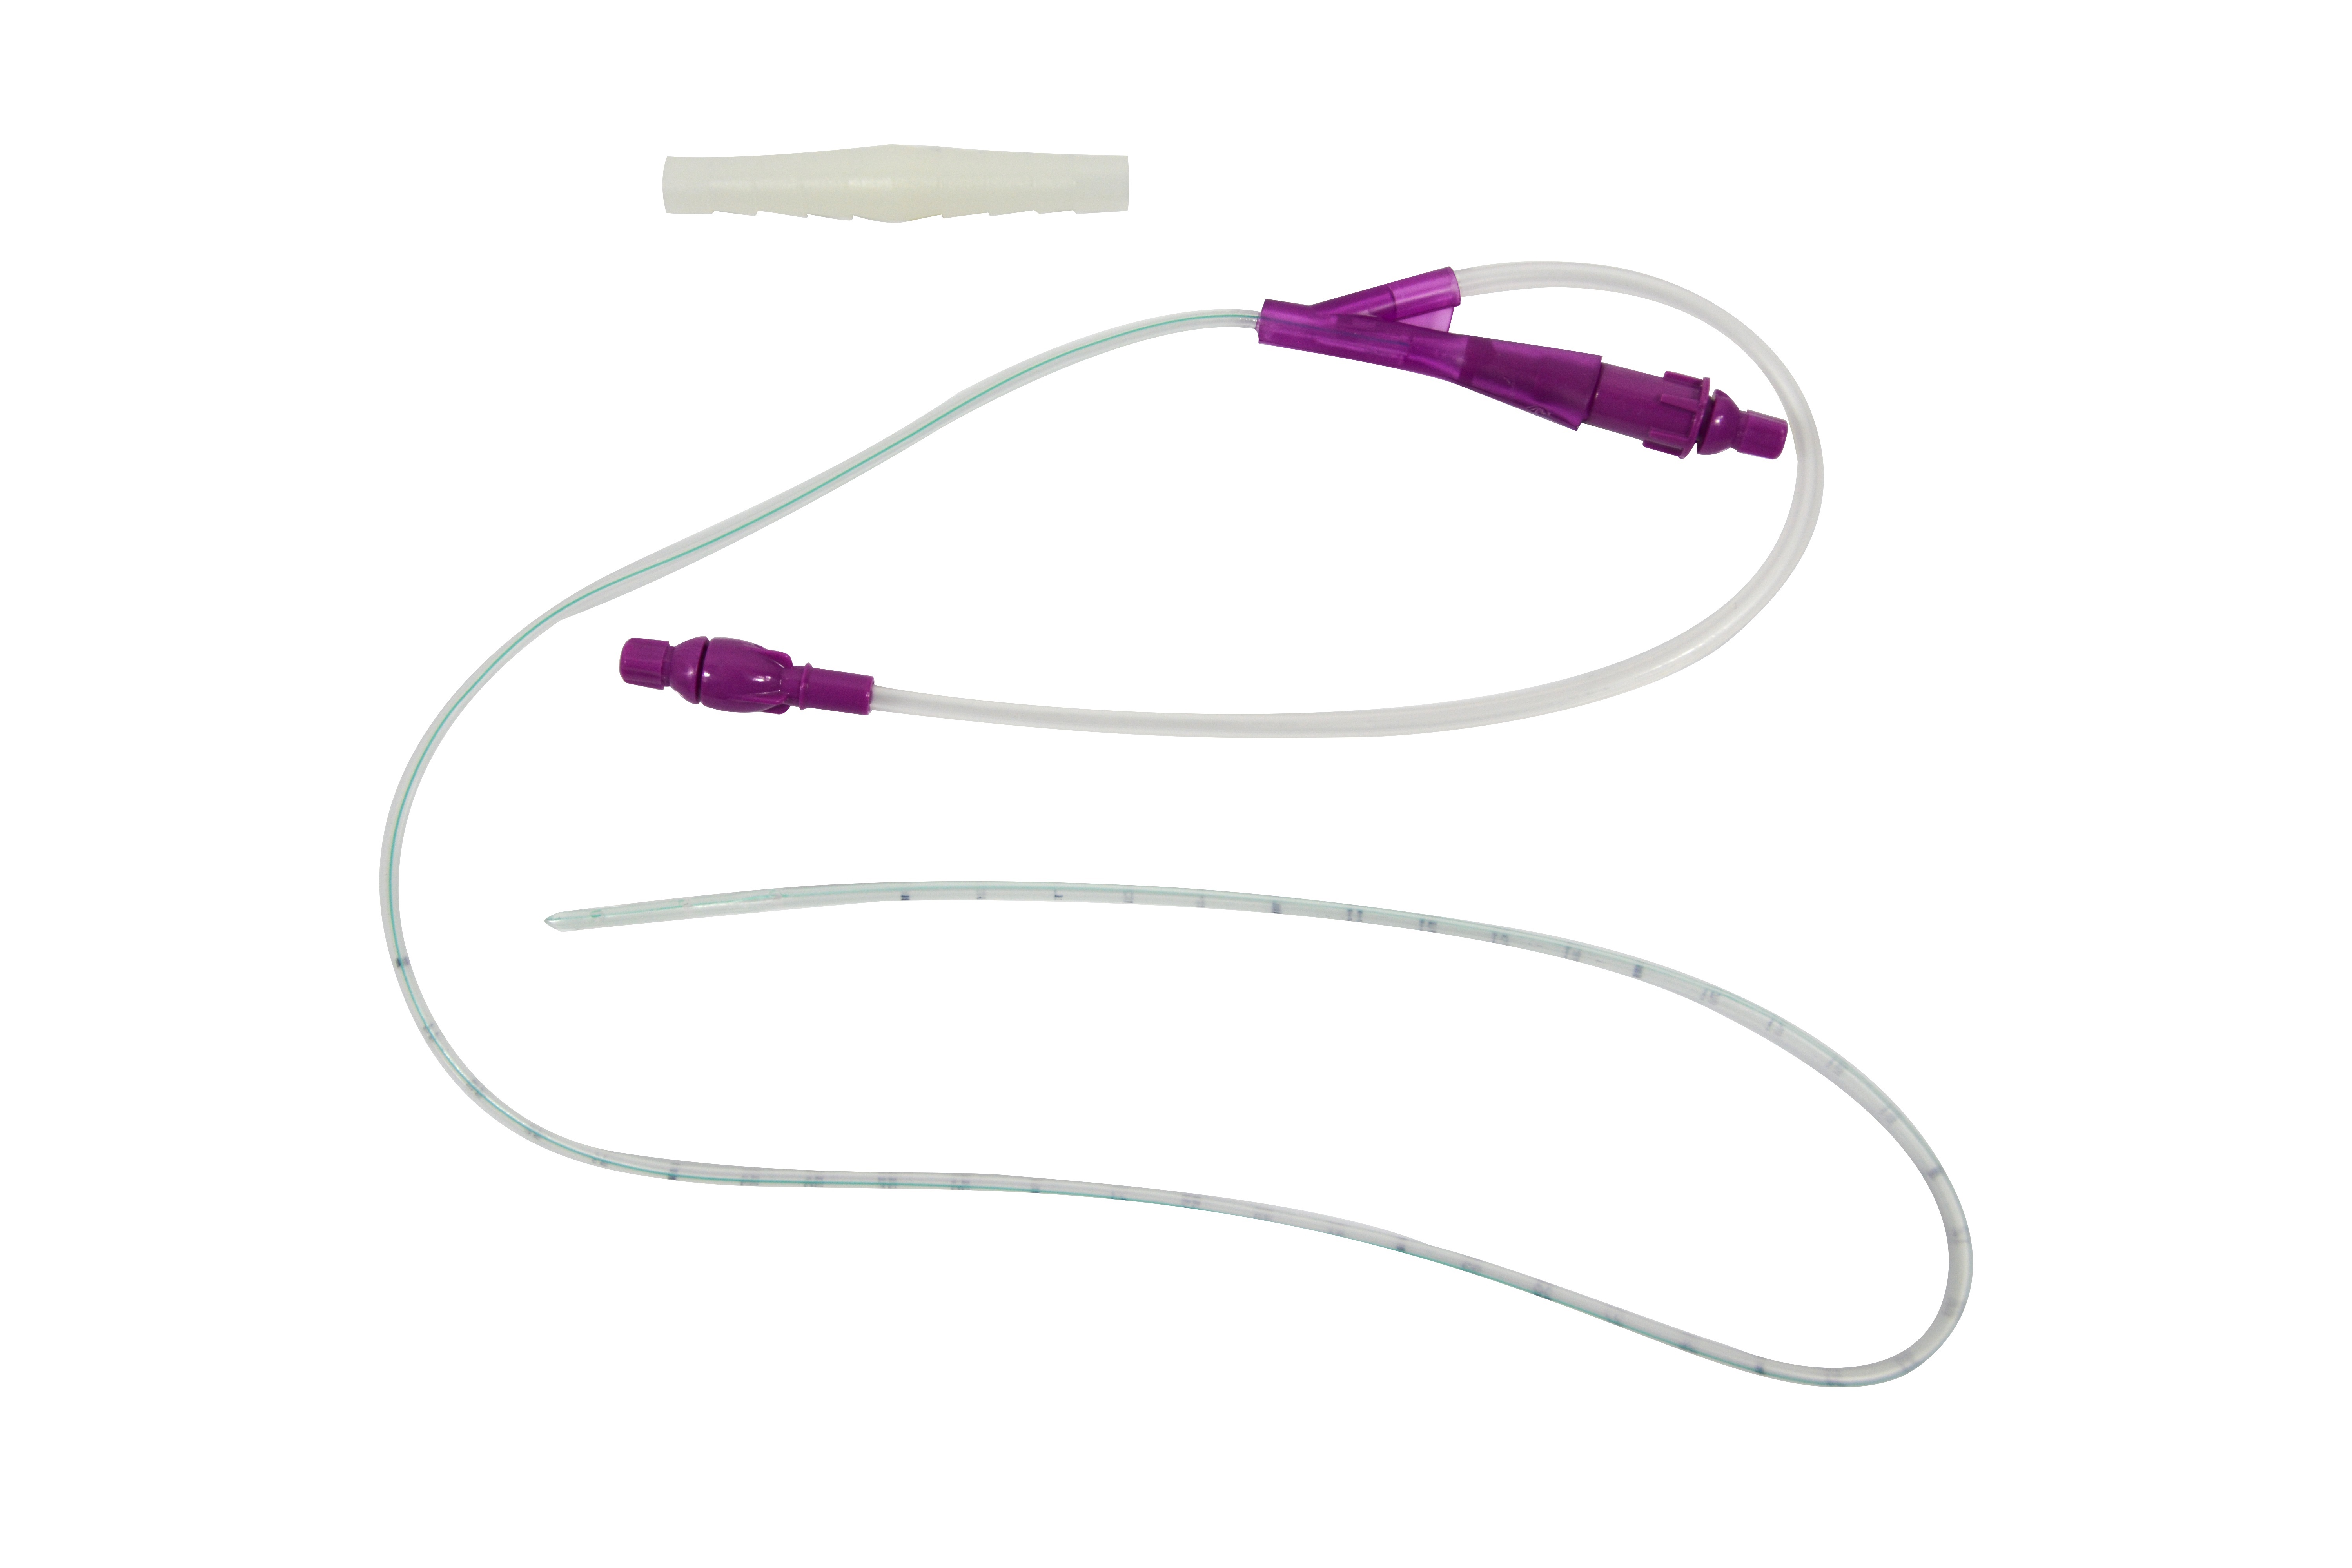 Nutrisafe 2 dual-flow gastric tube